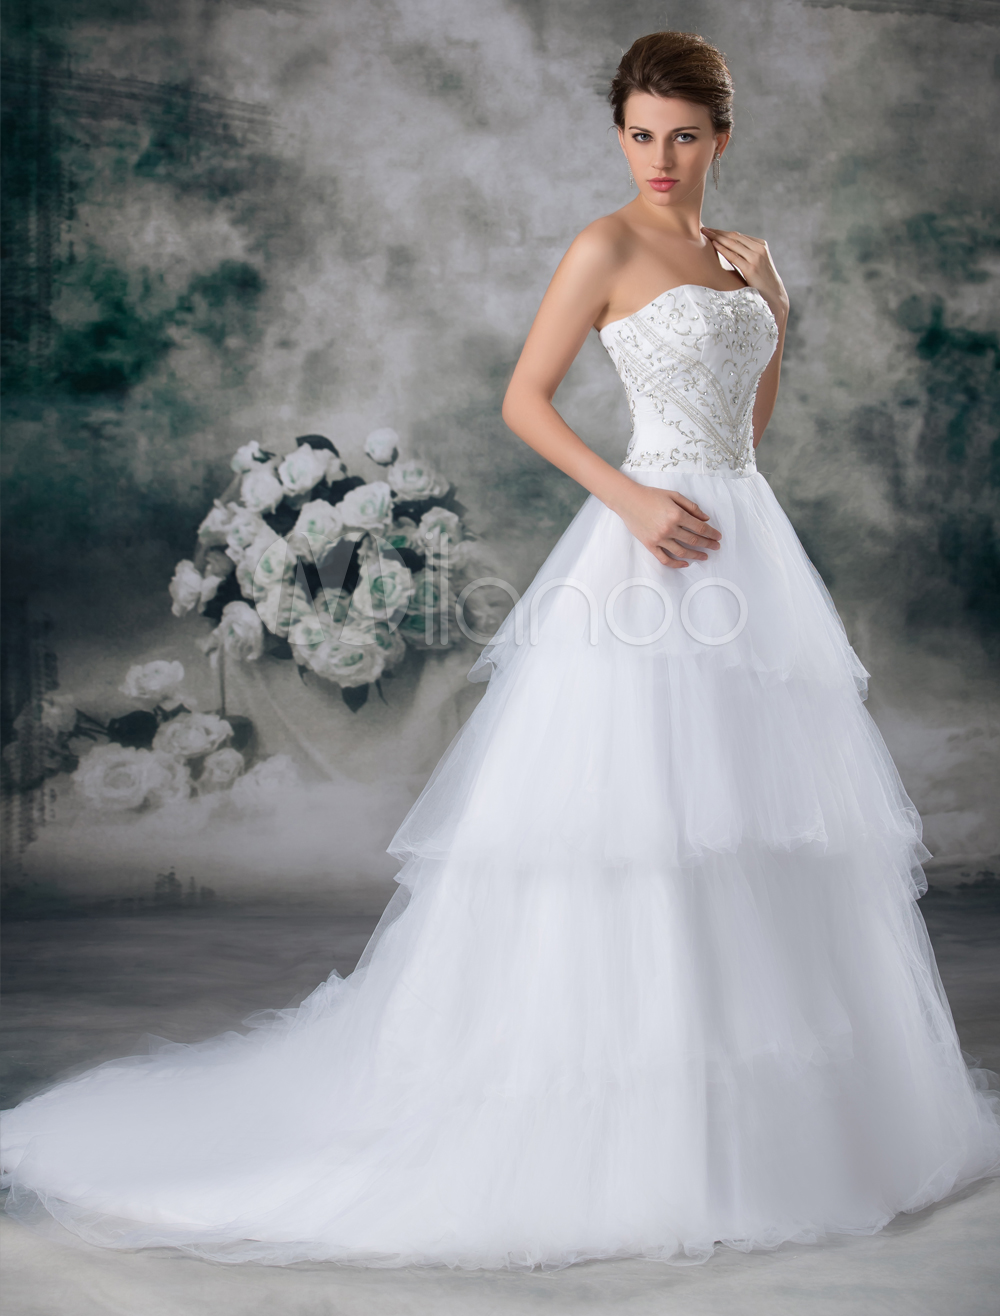 Classical White Strapless Beading Tulle Wedding Dress For Bride ...